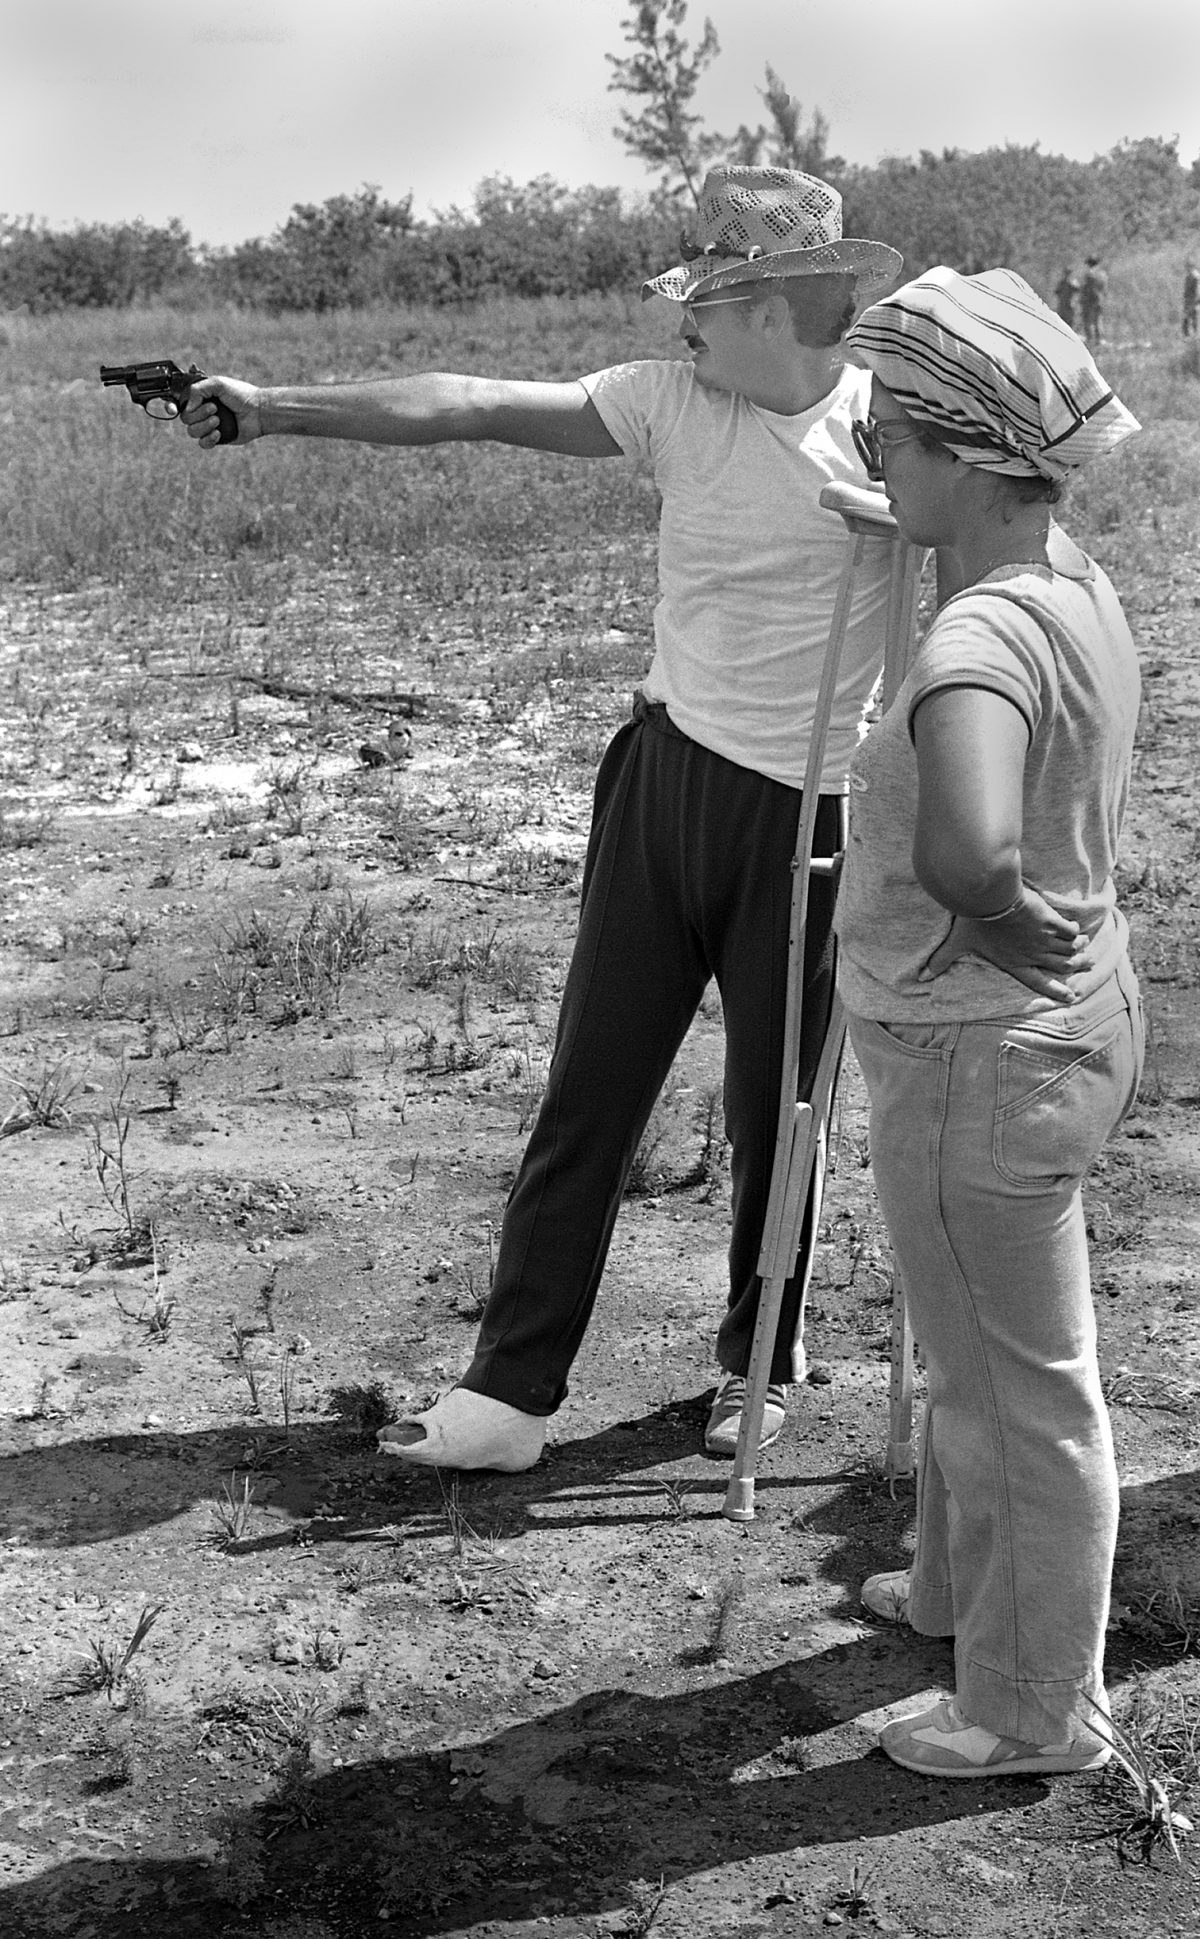 Everglades target practice, Florida 1981